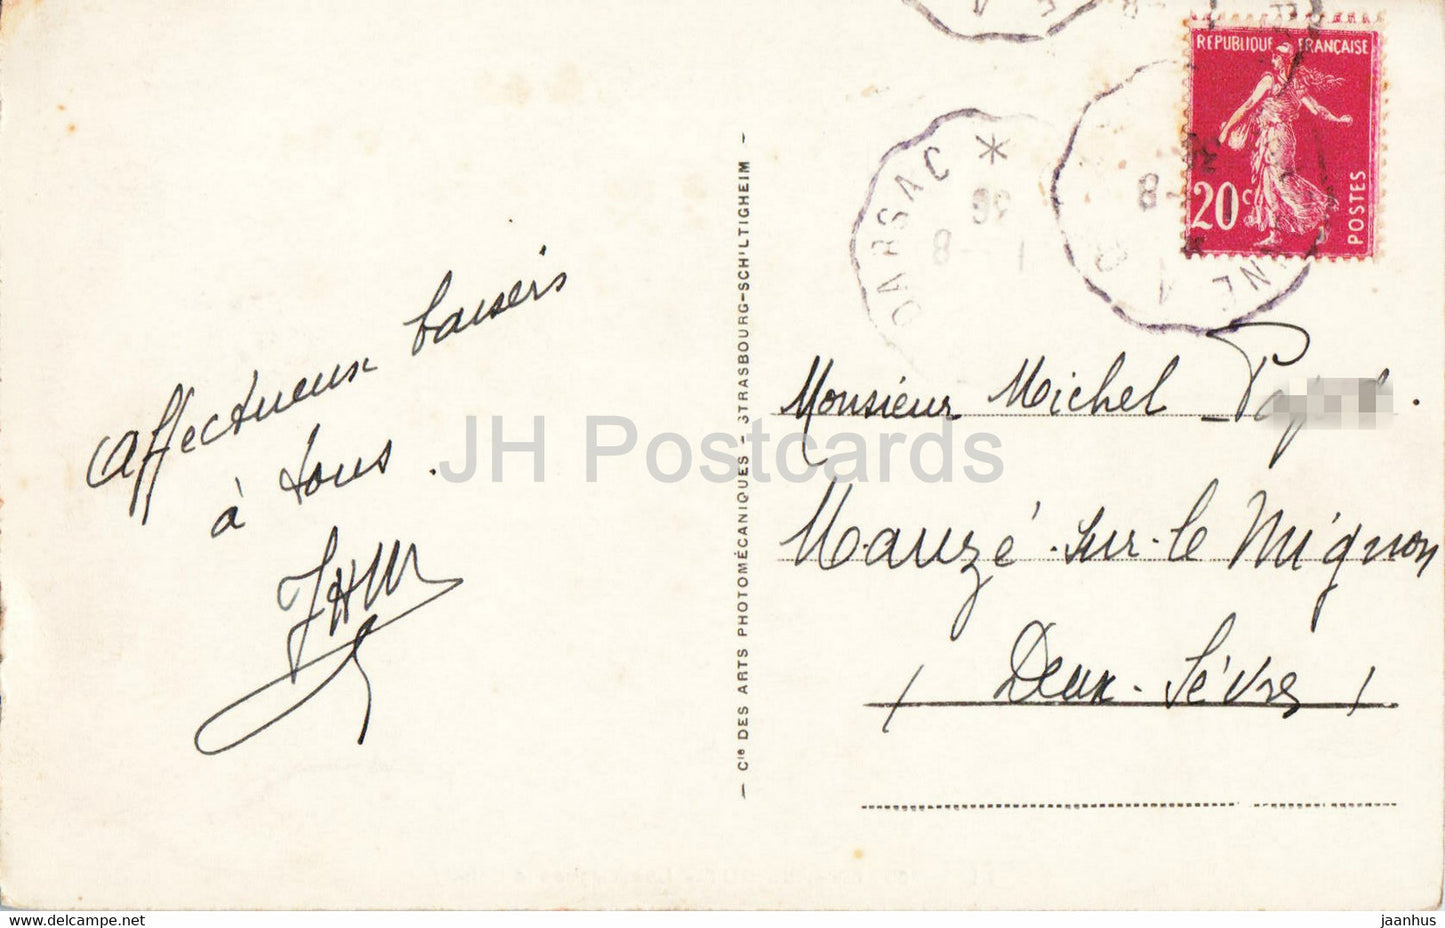 Env du Puy - Les Orgues d'Espaly - 106 - old postcard - 1930s - France - used